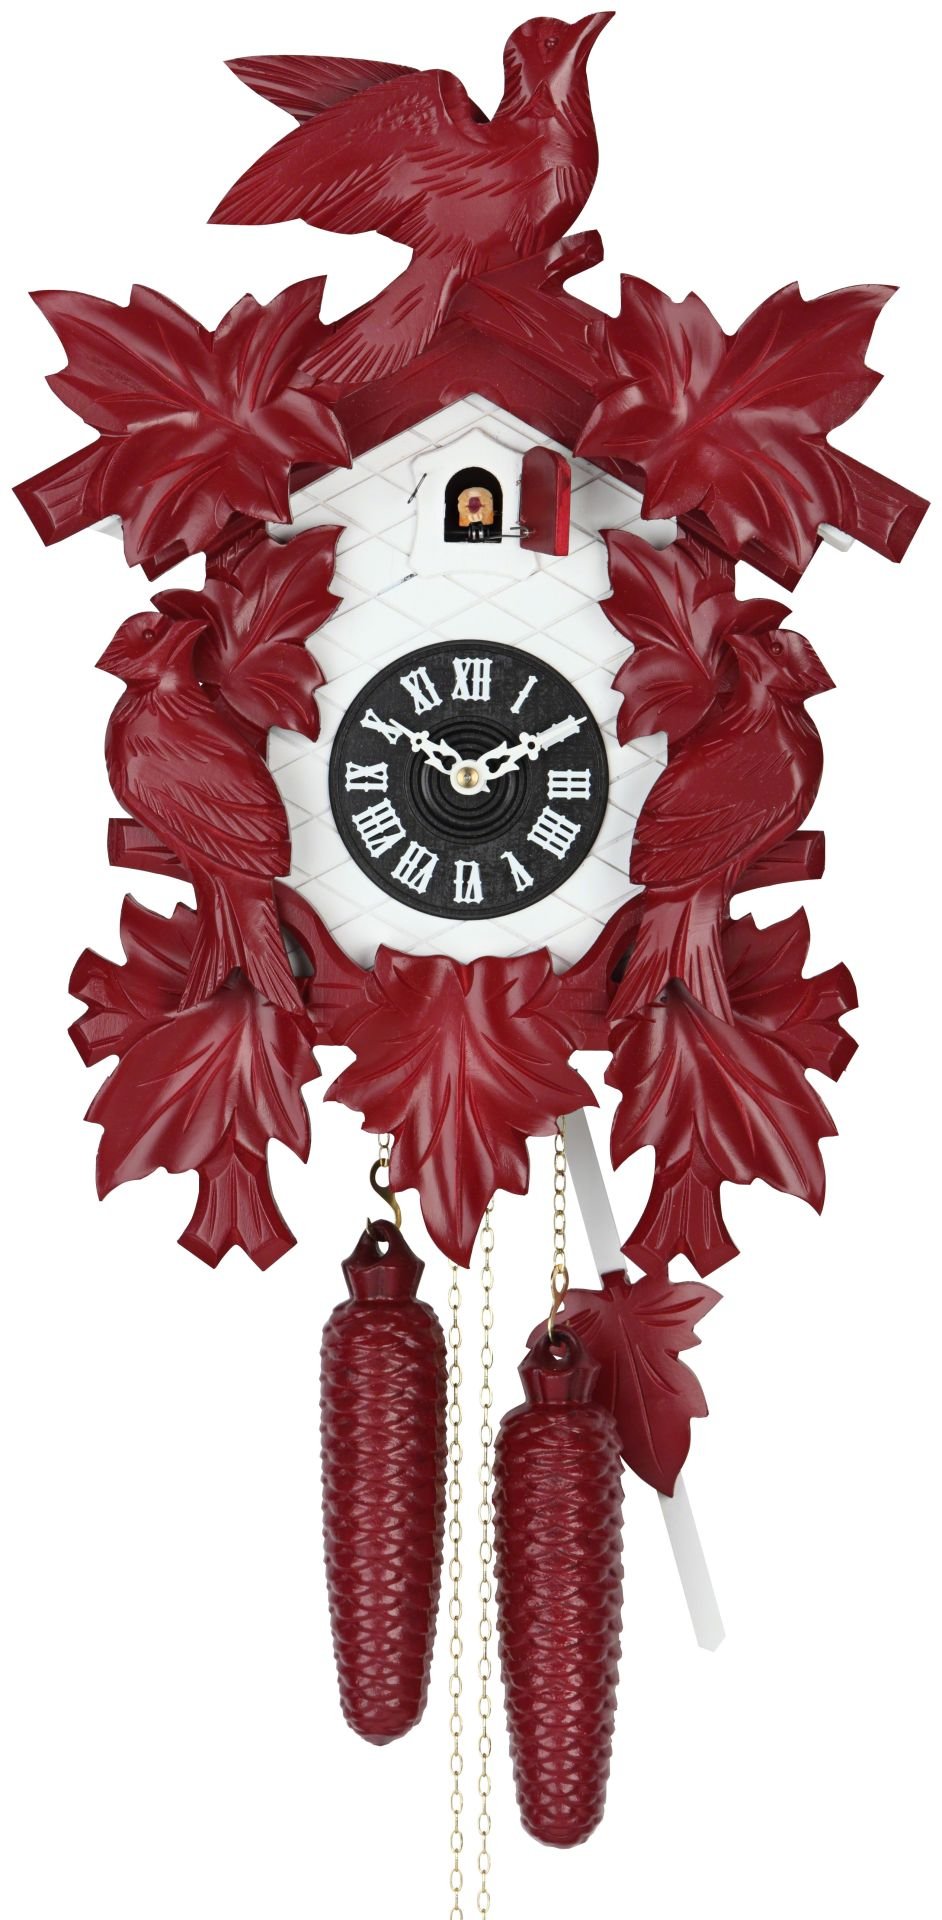 Reloj de cuco estilo “Madera tallada” movimiento mecánico de 8 días 40cm de Hekas